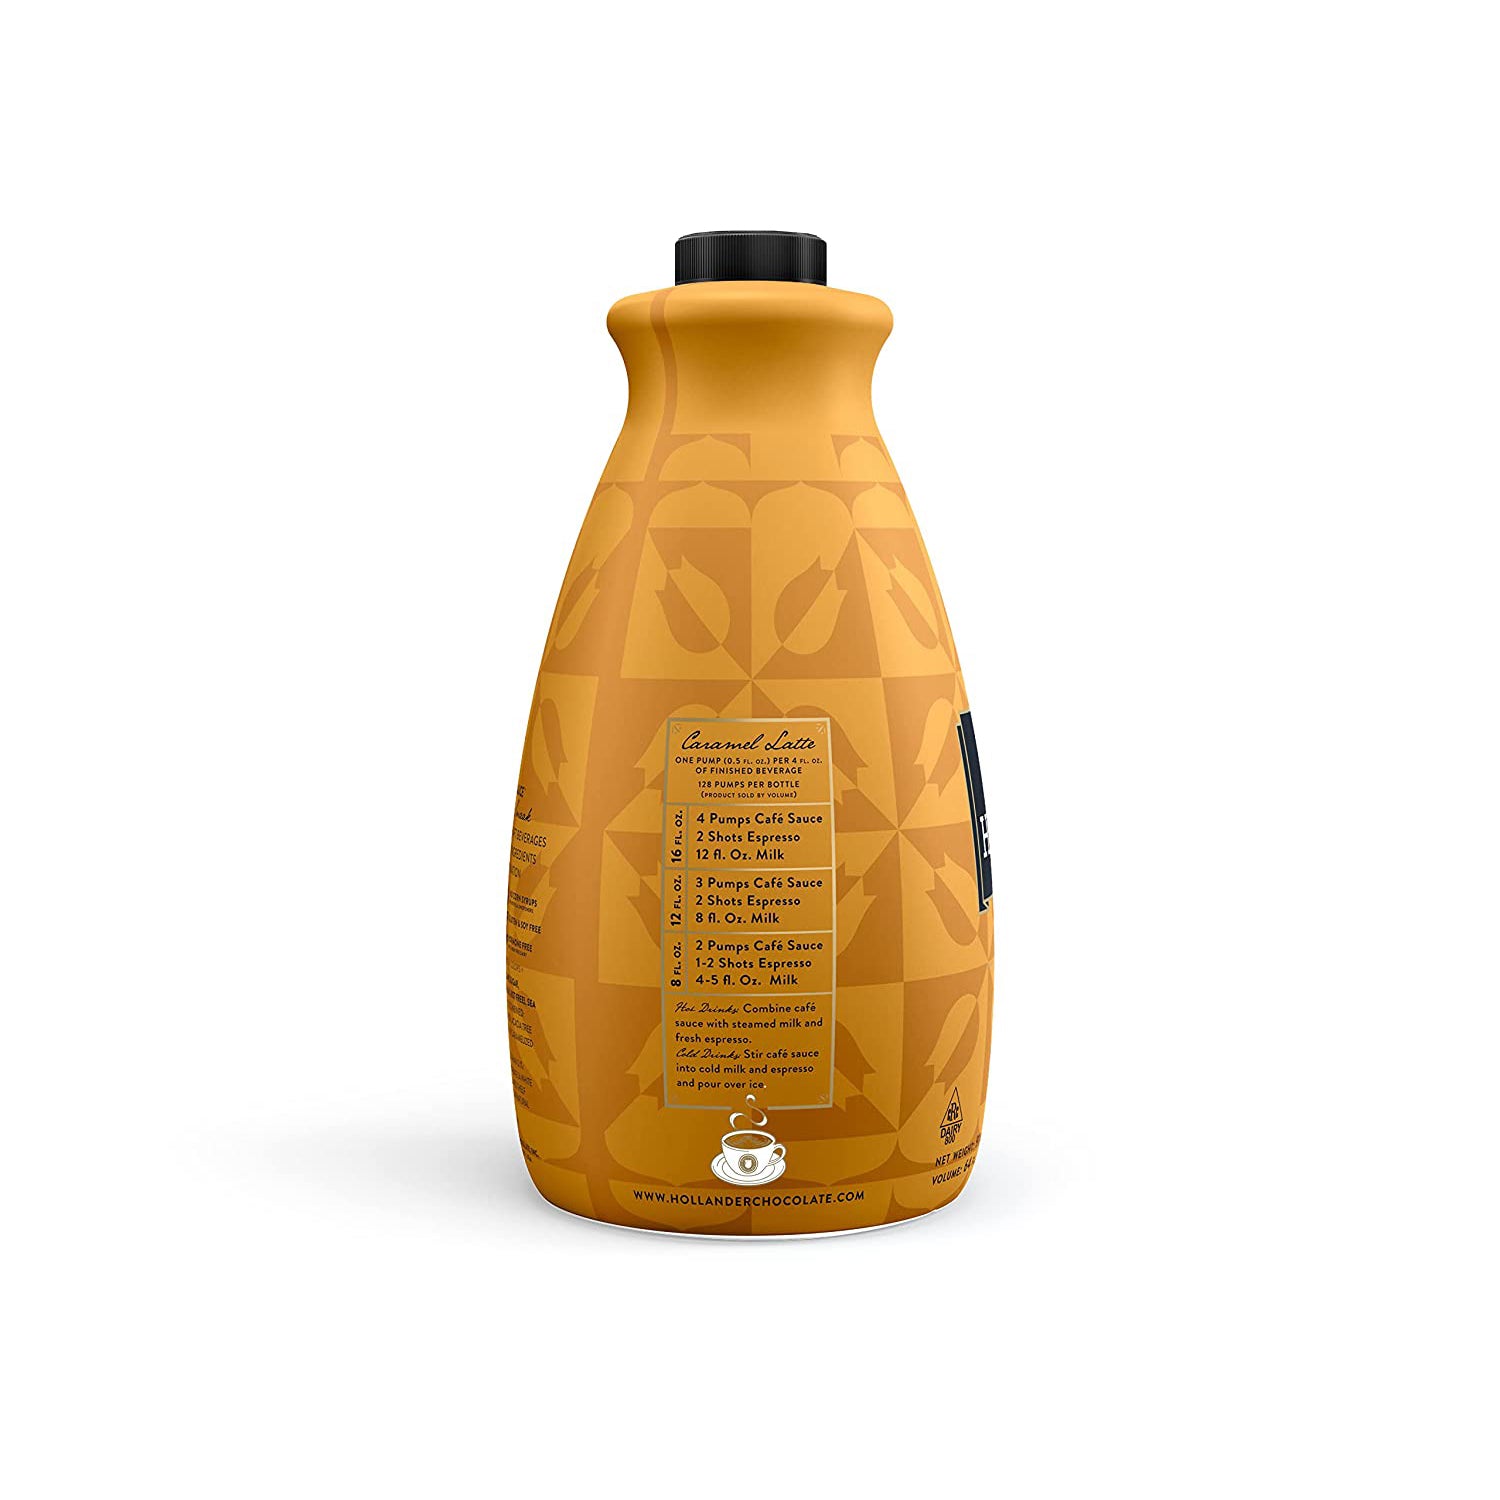 Hollander Sauce - 64 oz. Bottle: Classic Caramel